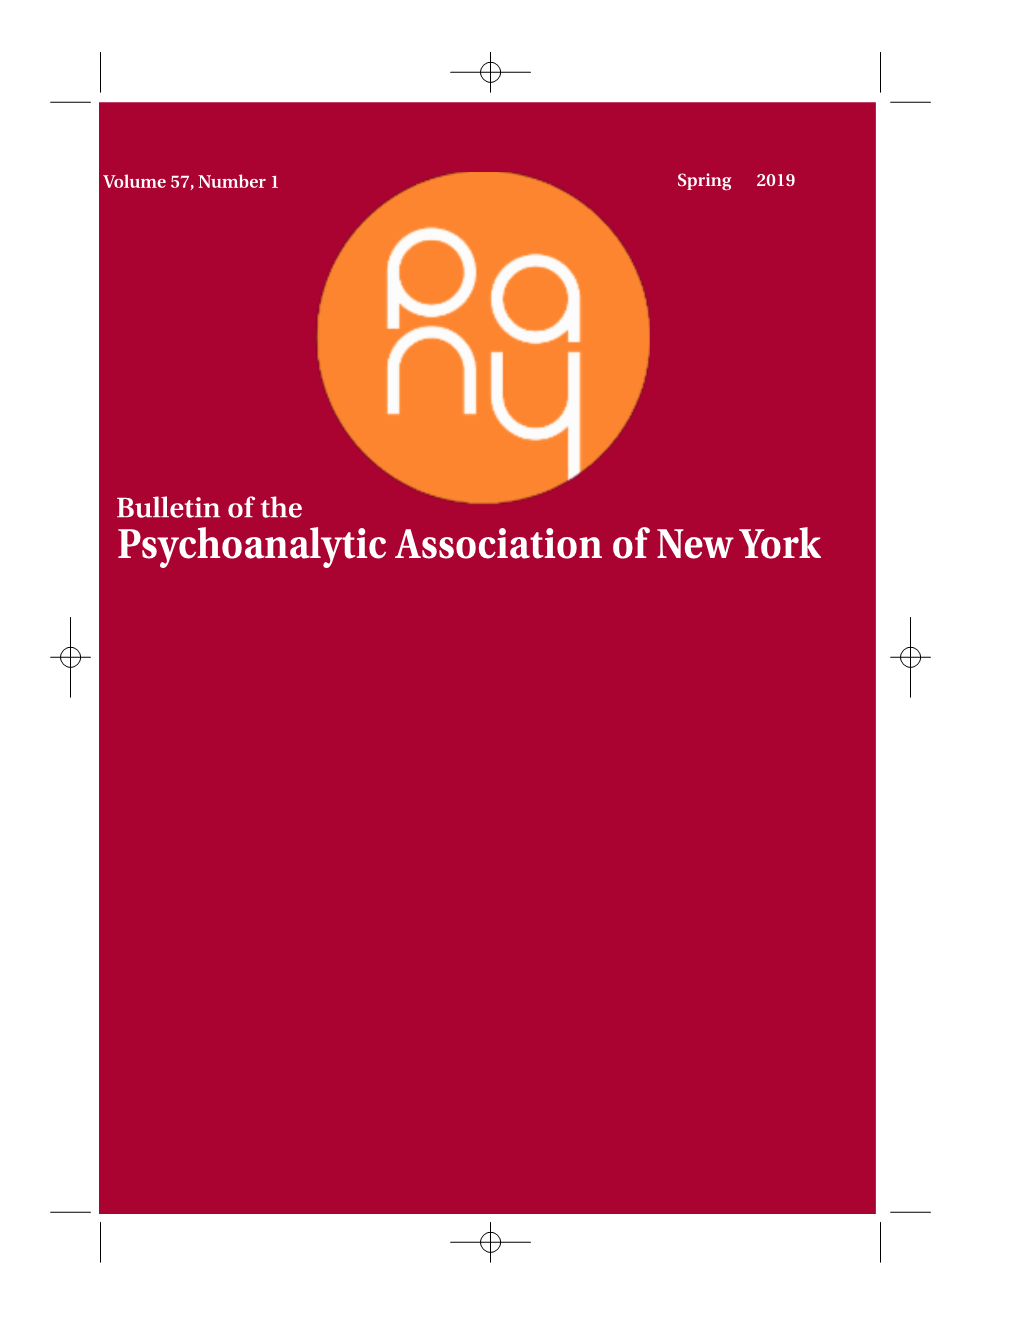 Bulletin of the Psychoanalytic Association of New York